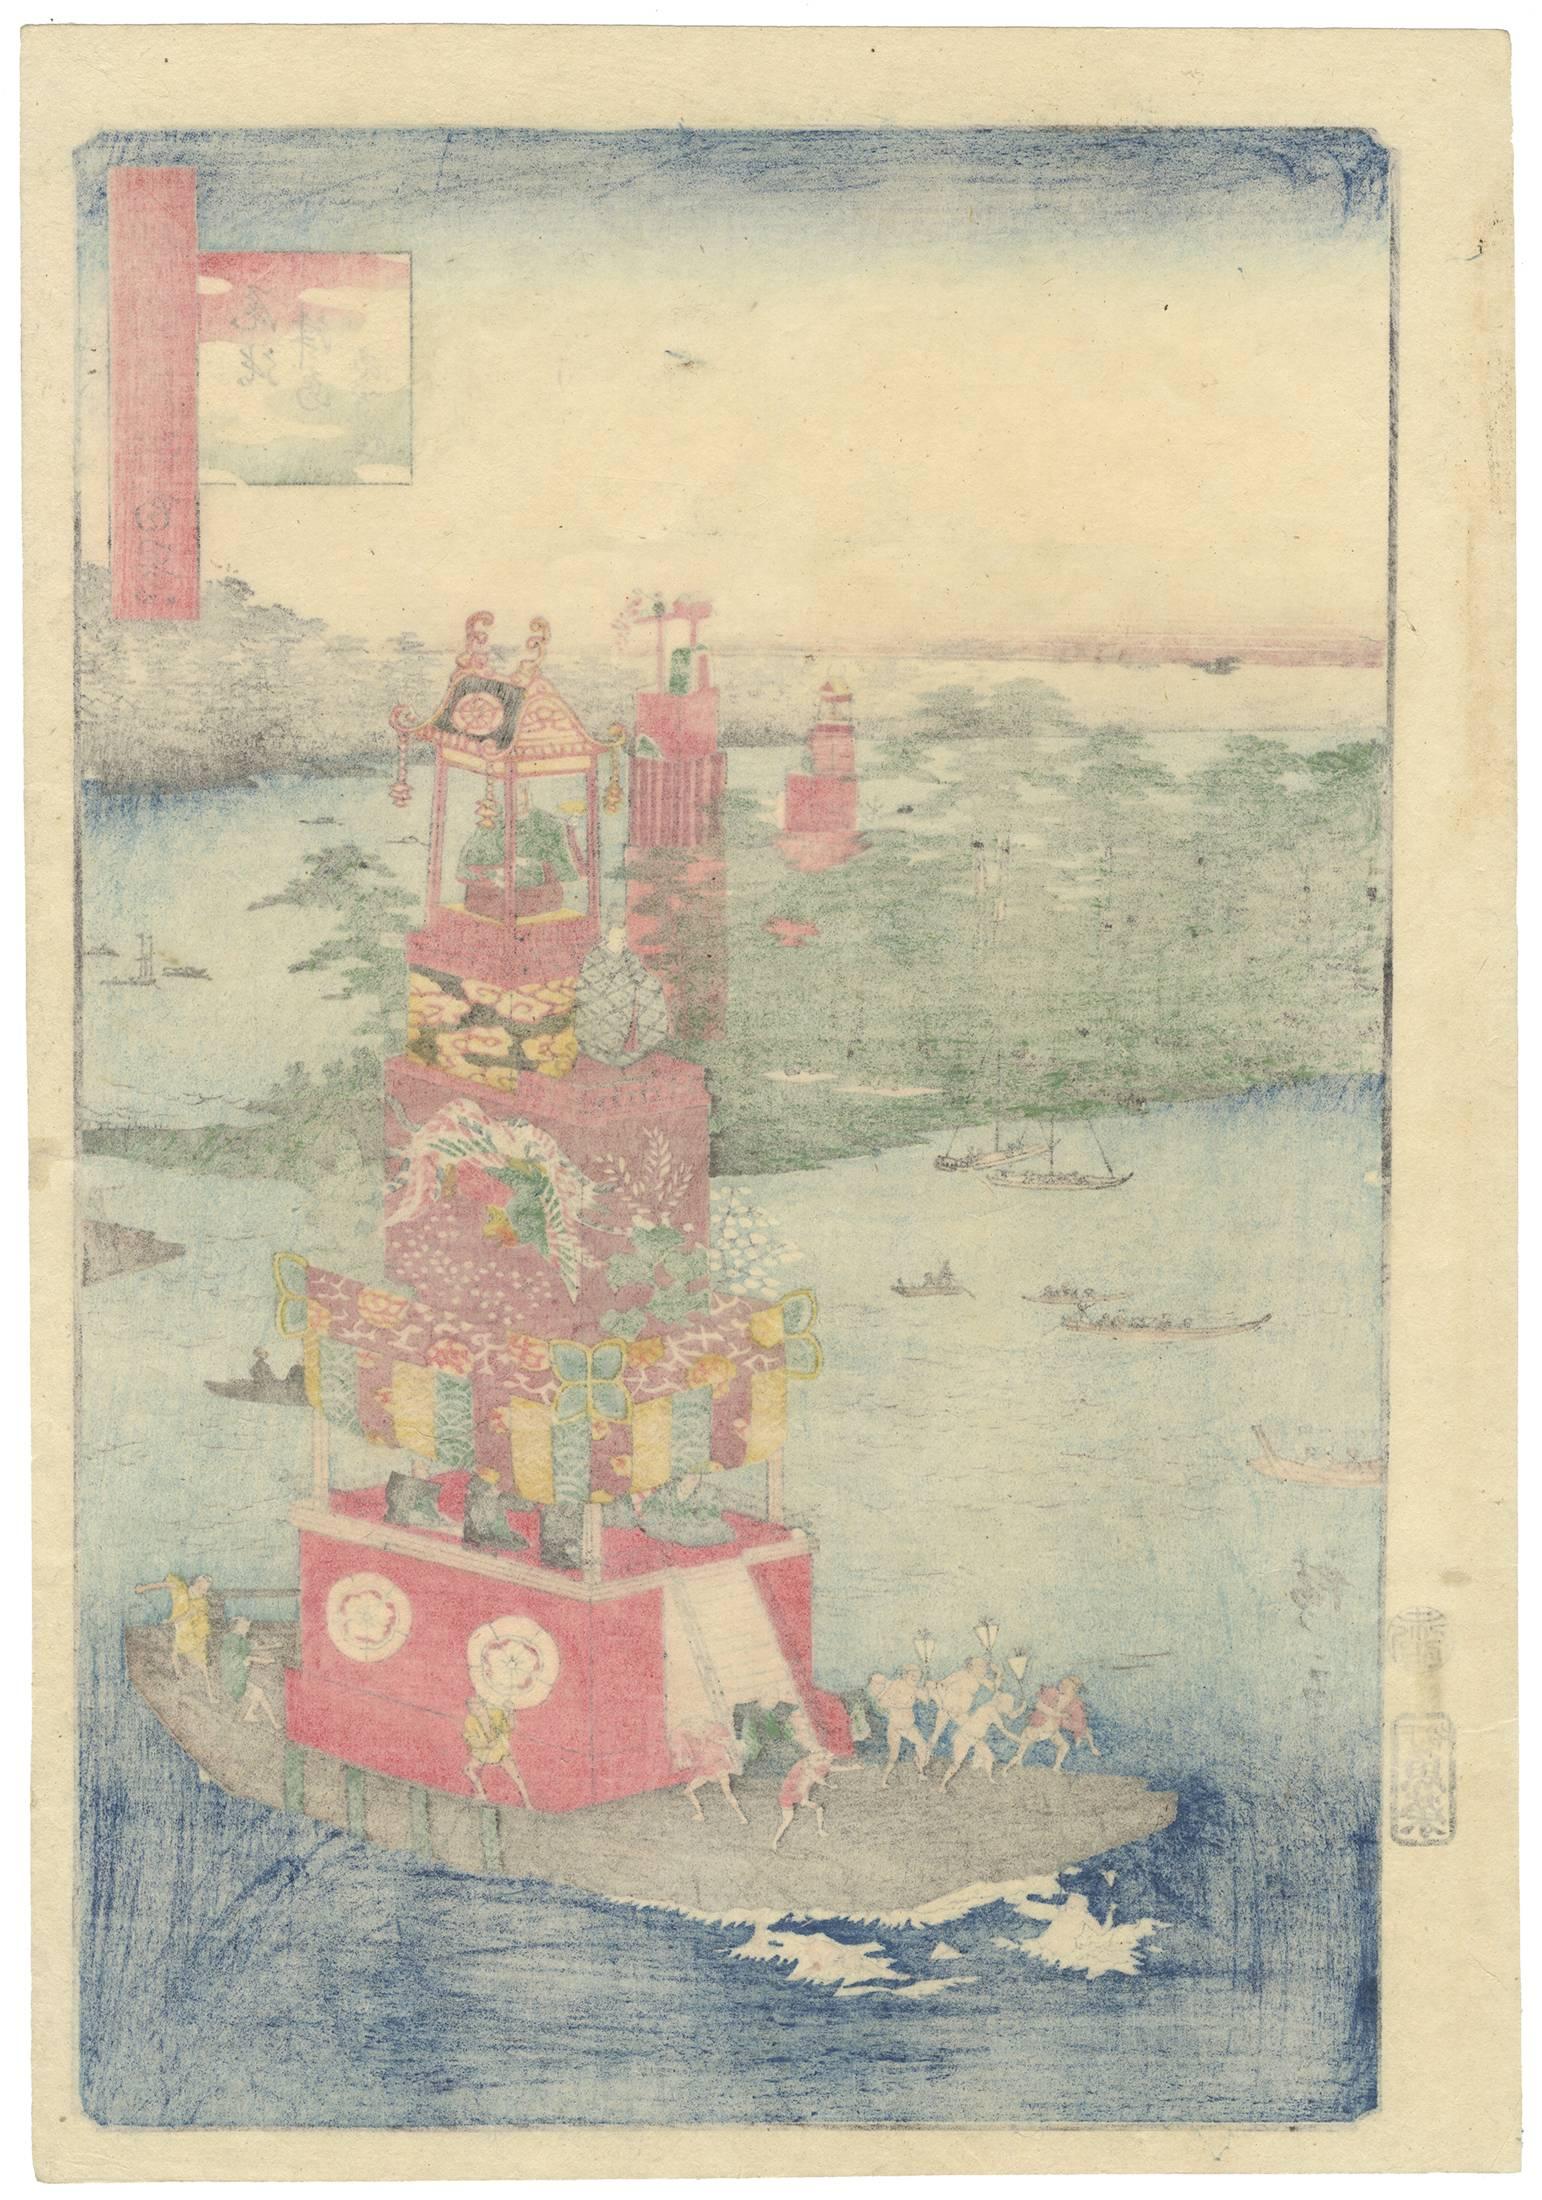 Title: Festival in Tsushima Island, Owari Province
Artist: Hiroshige 2nd / Utagawa Hiroshige II
Series: One Hundred Famous Views of Provinces
Publisher: Uoya Eikichi
Published in 1859.

This print shows the Tenno river in Tsushima, Aichi, on